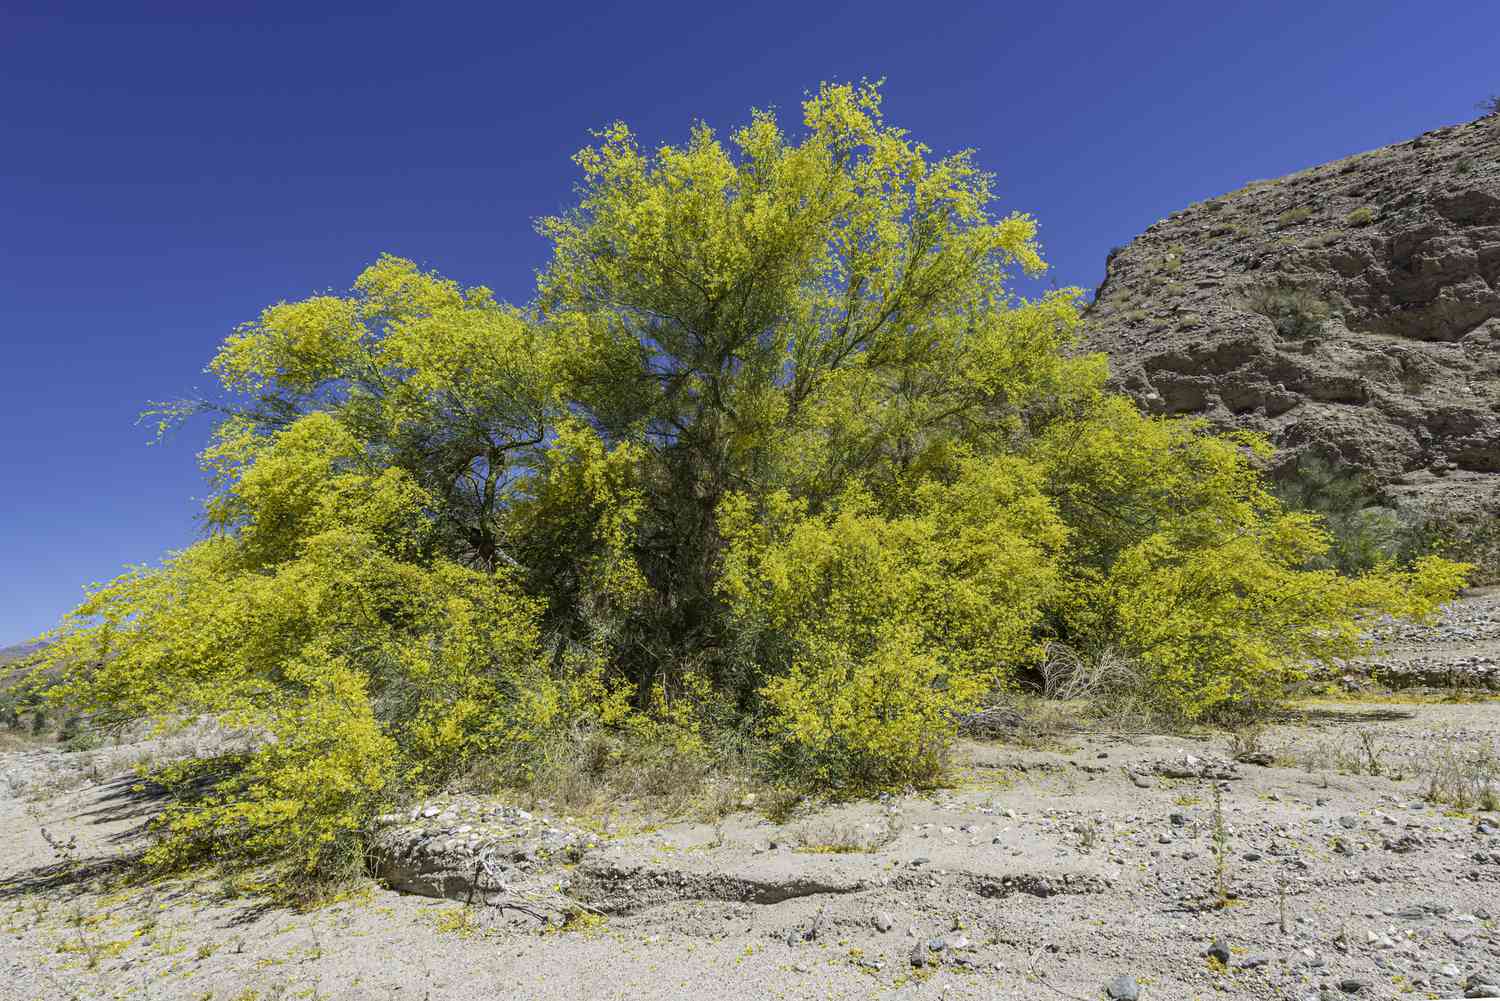 Blue palo verde (Parkinsonia florida) growing in a desert setting